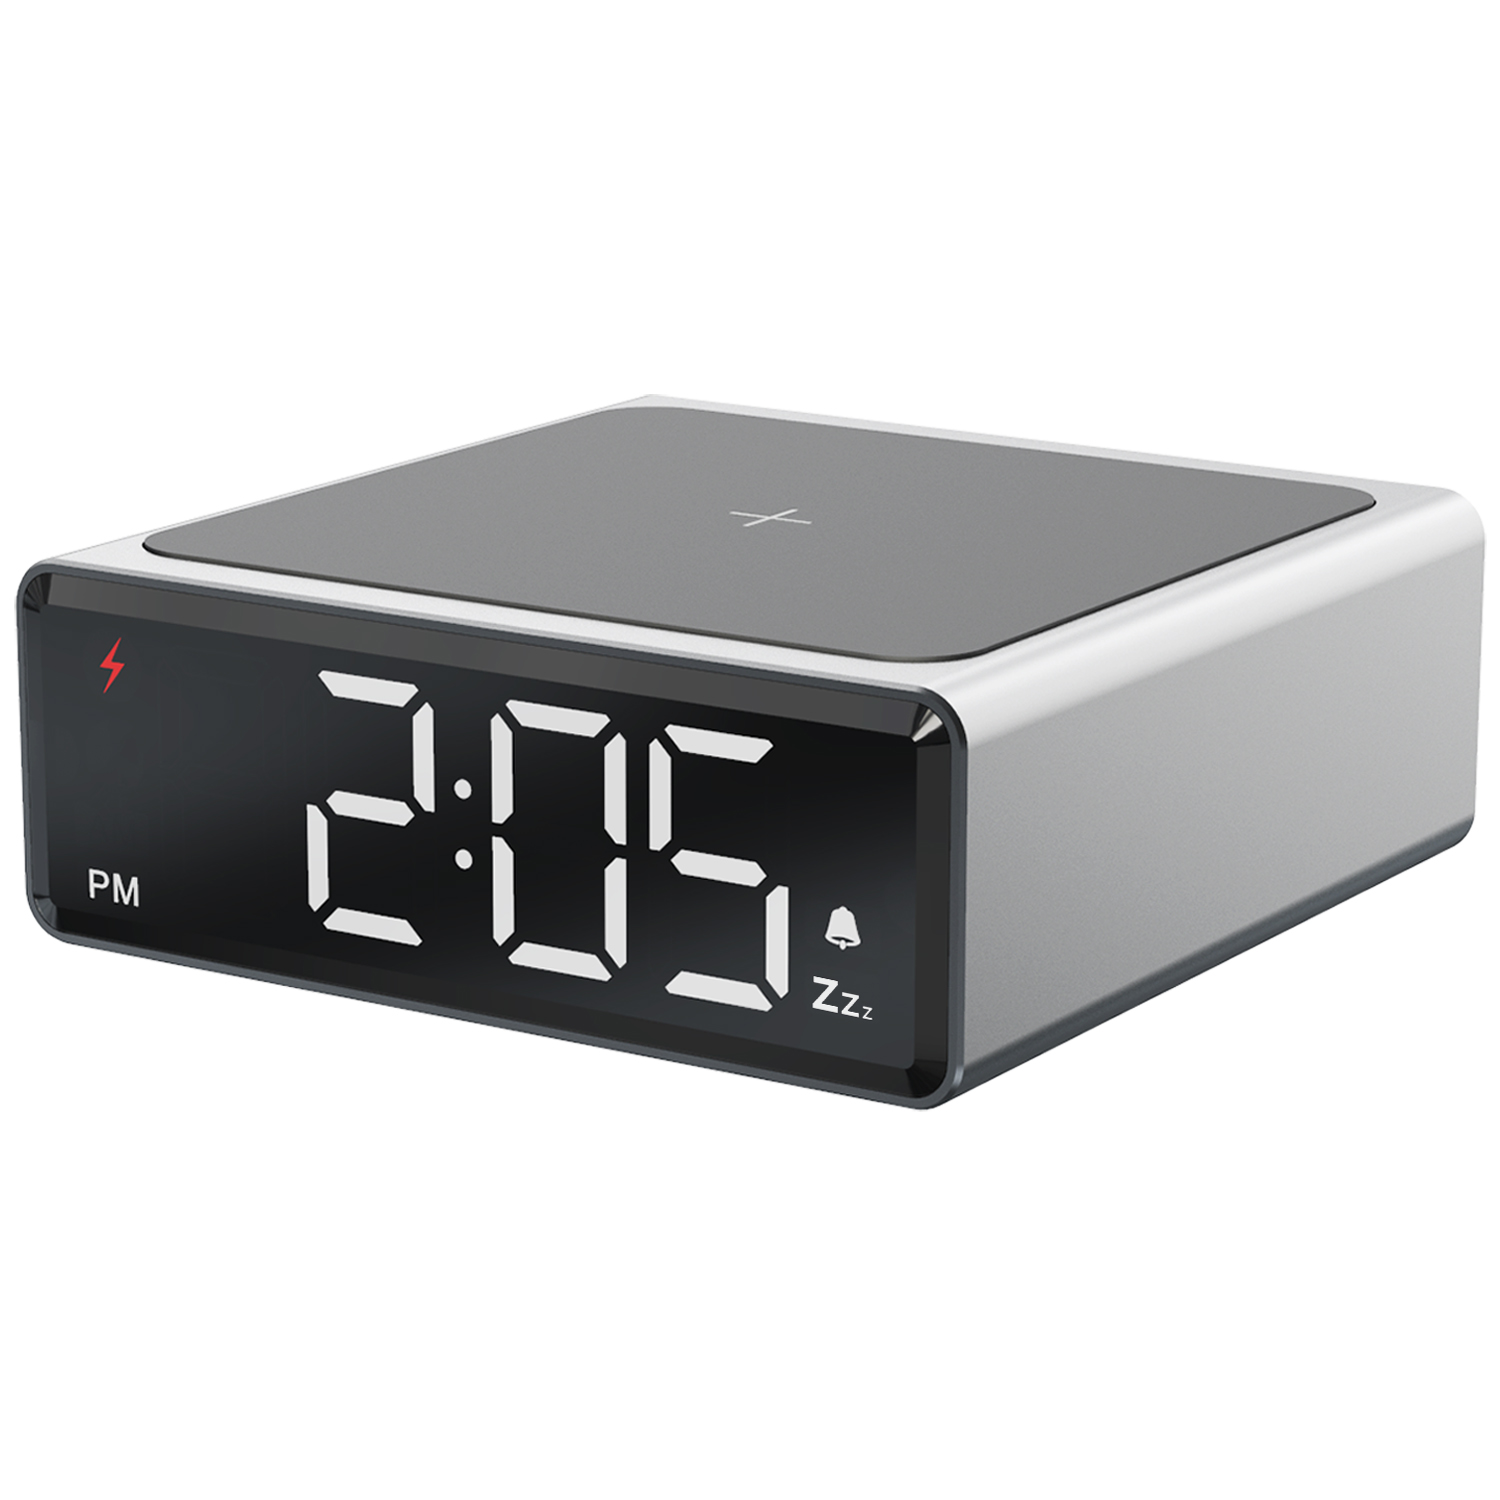 LEAD Small Metal Alarm Clock with Qi Wireless Charging Brand New Digital Alarm Clock,Multifunctional Alarm Simple Operation LED Full-Screen Display Electronic Clock